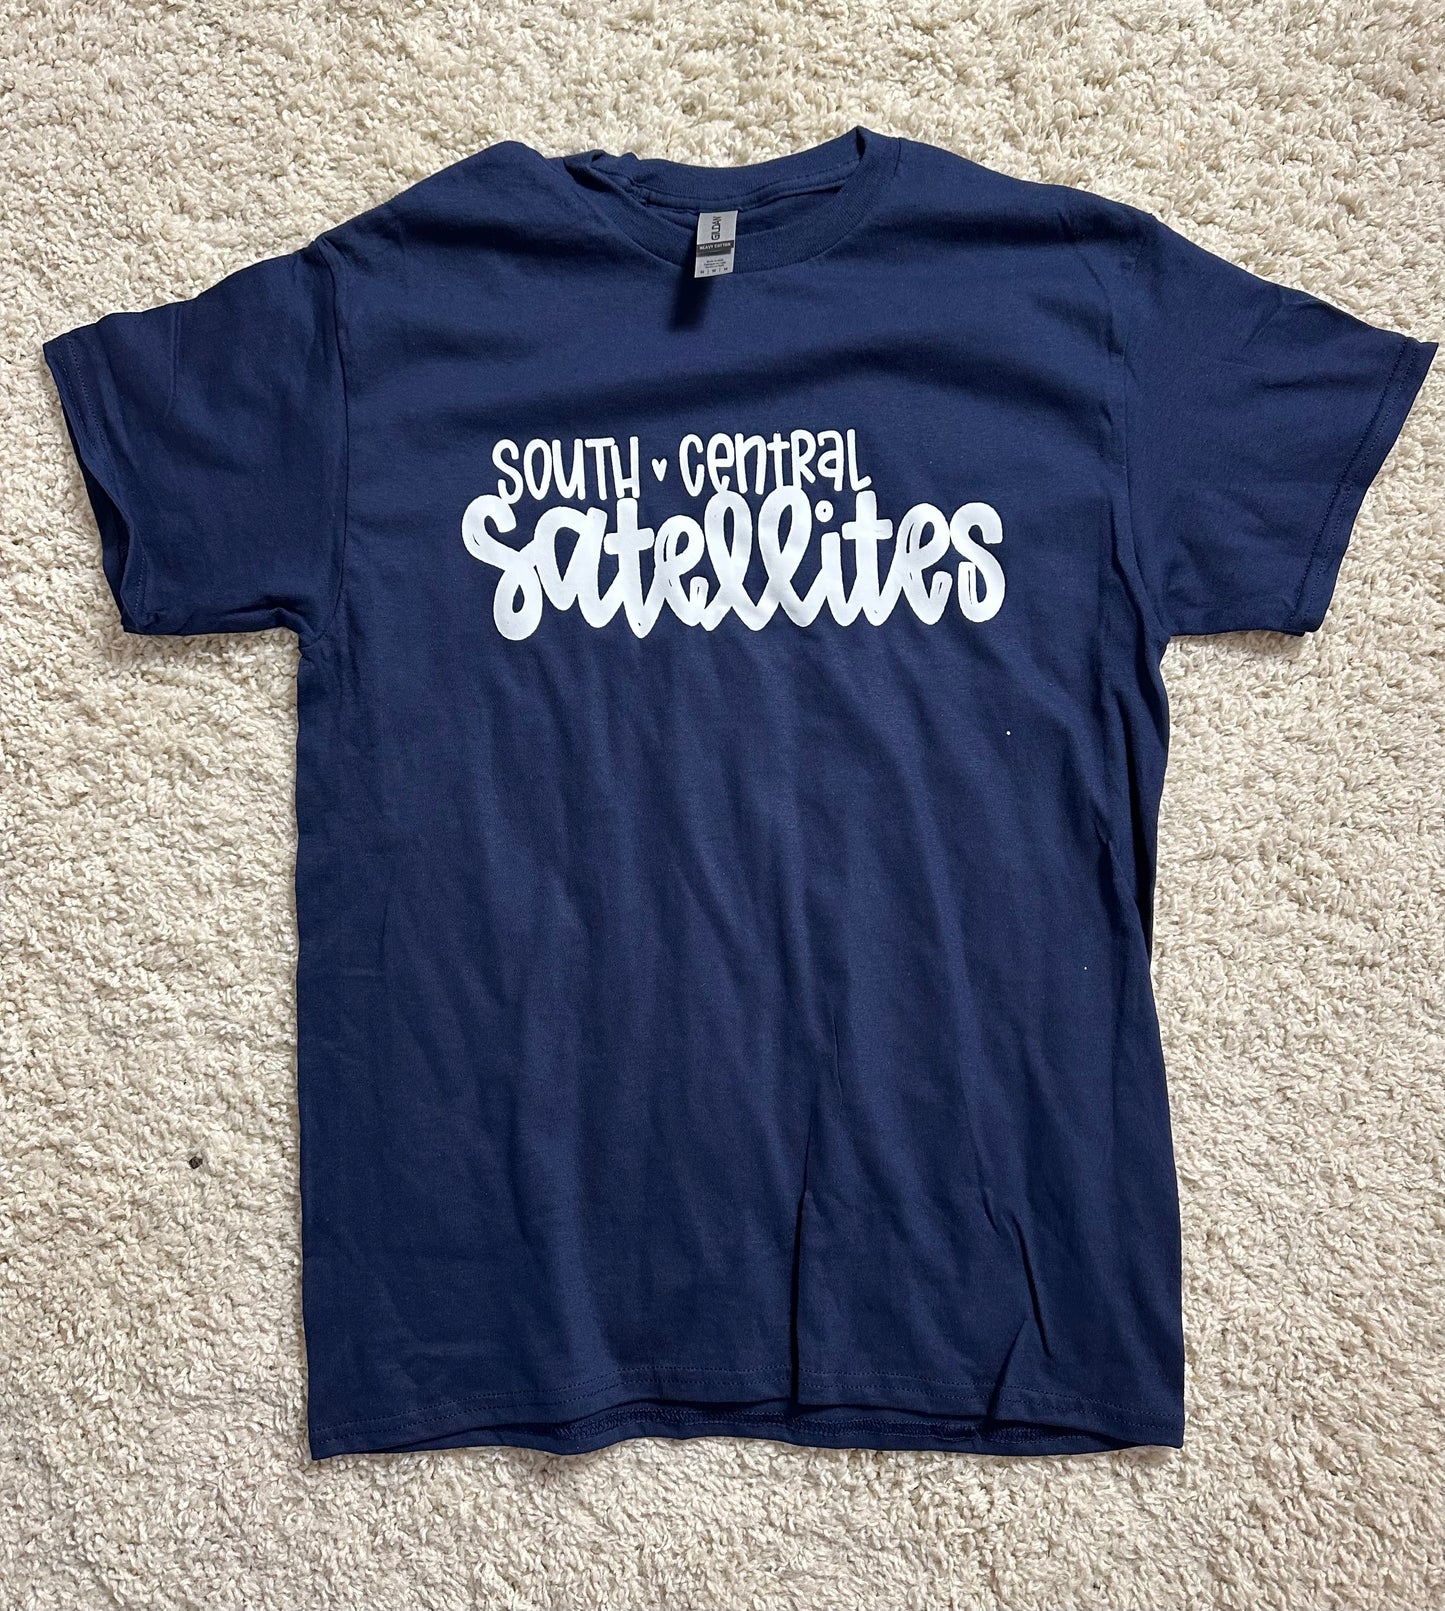 South Central Satellites Shirt